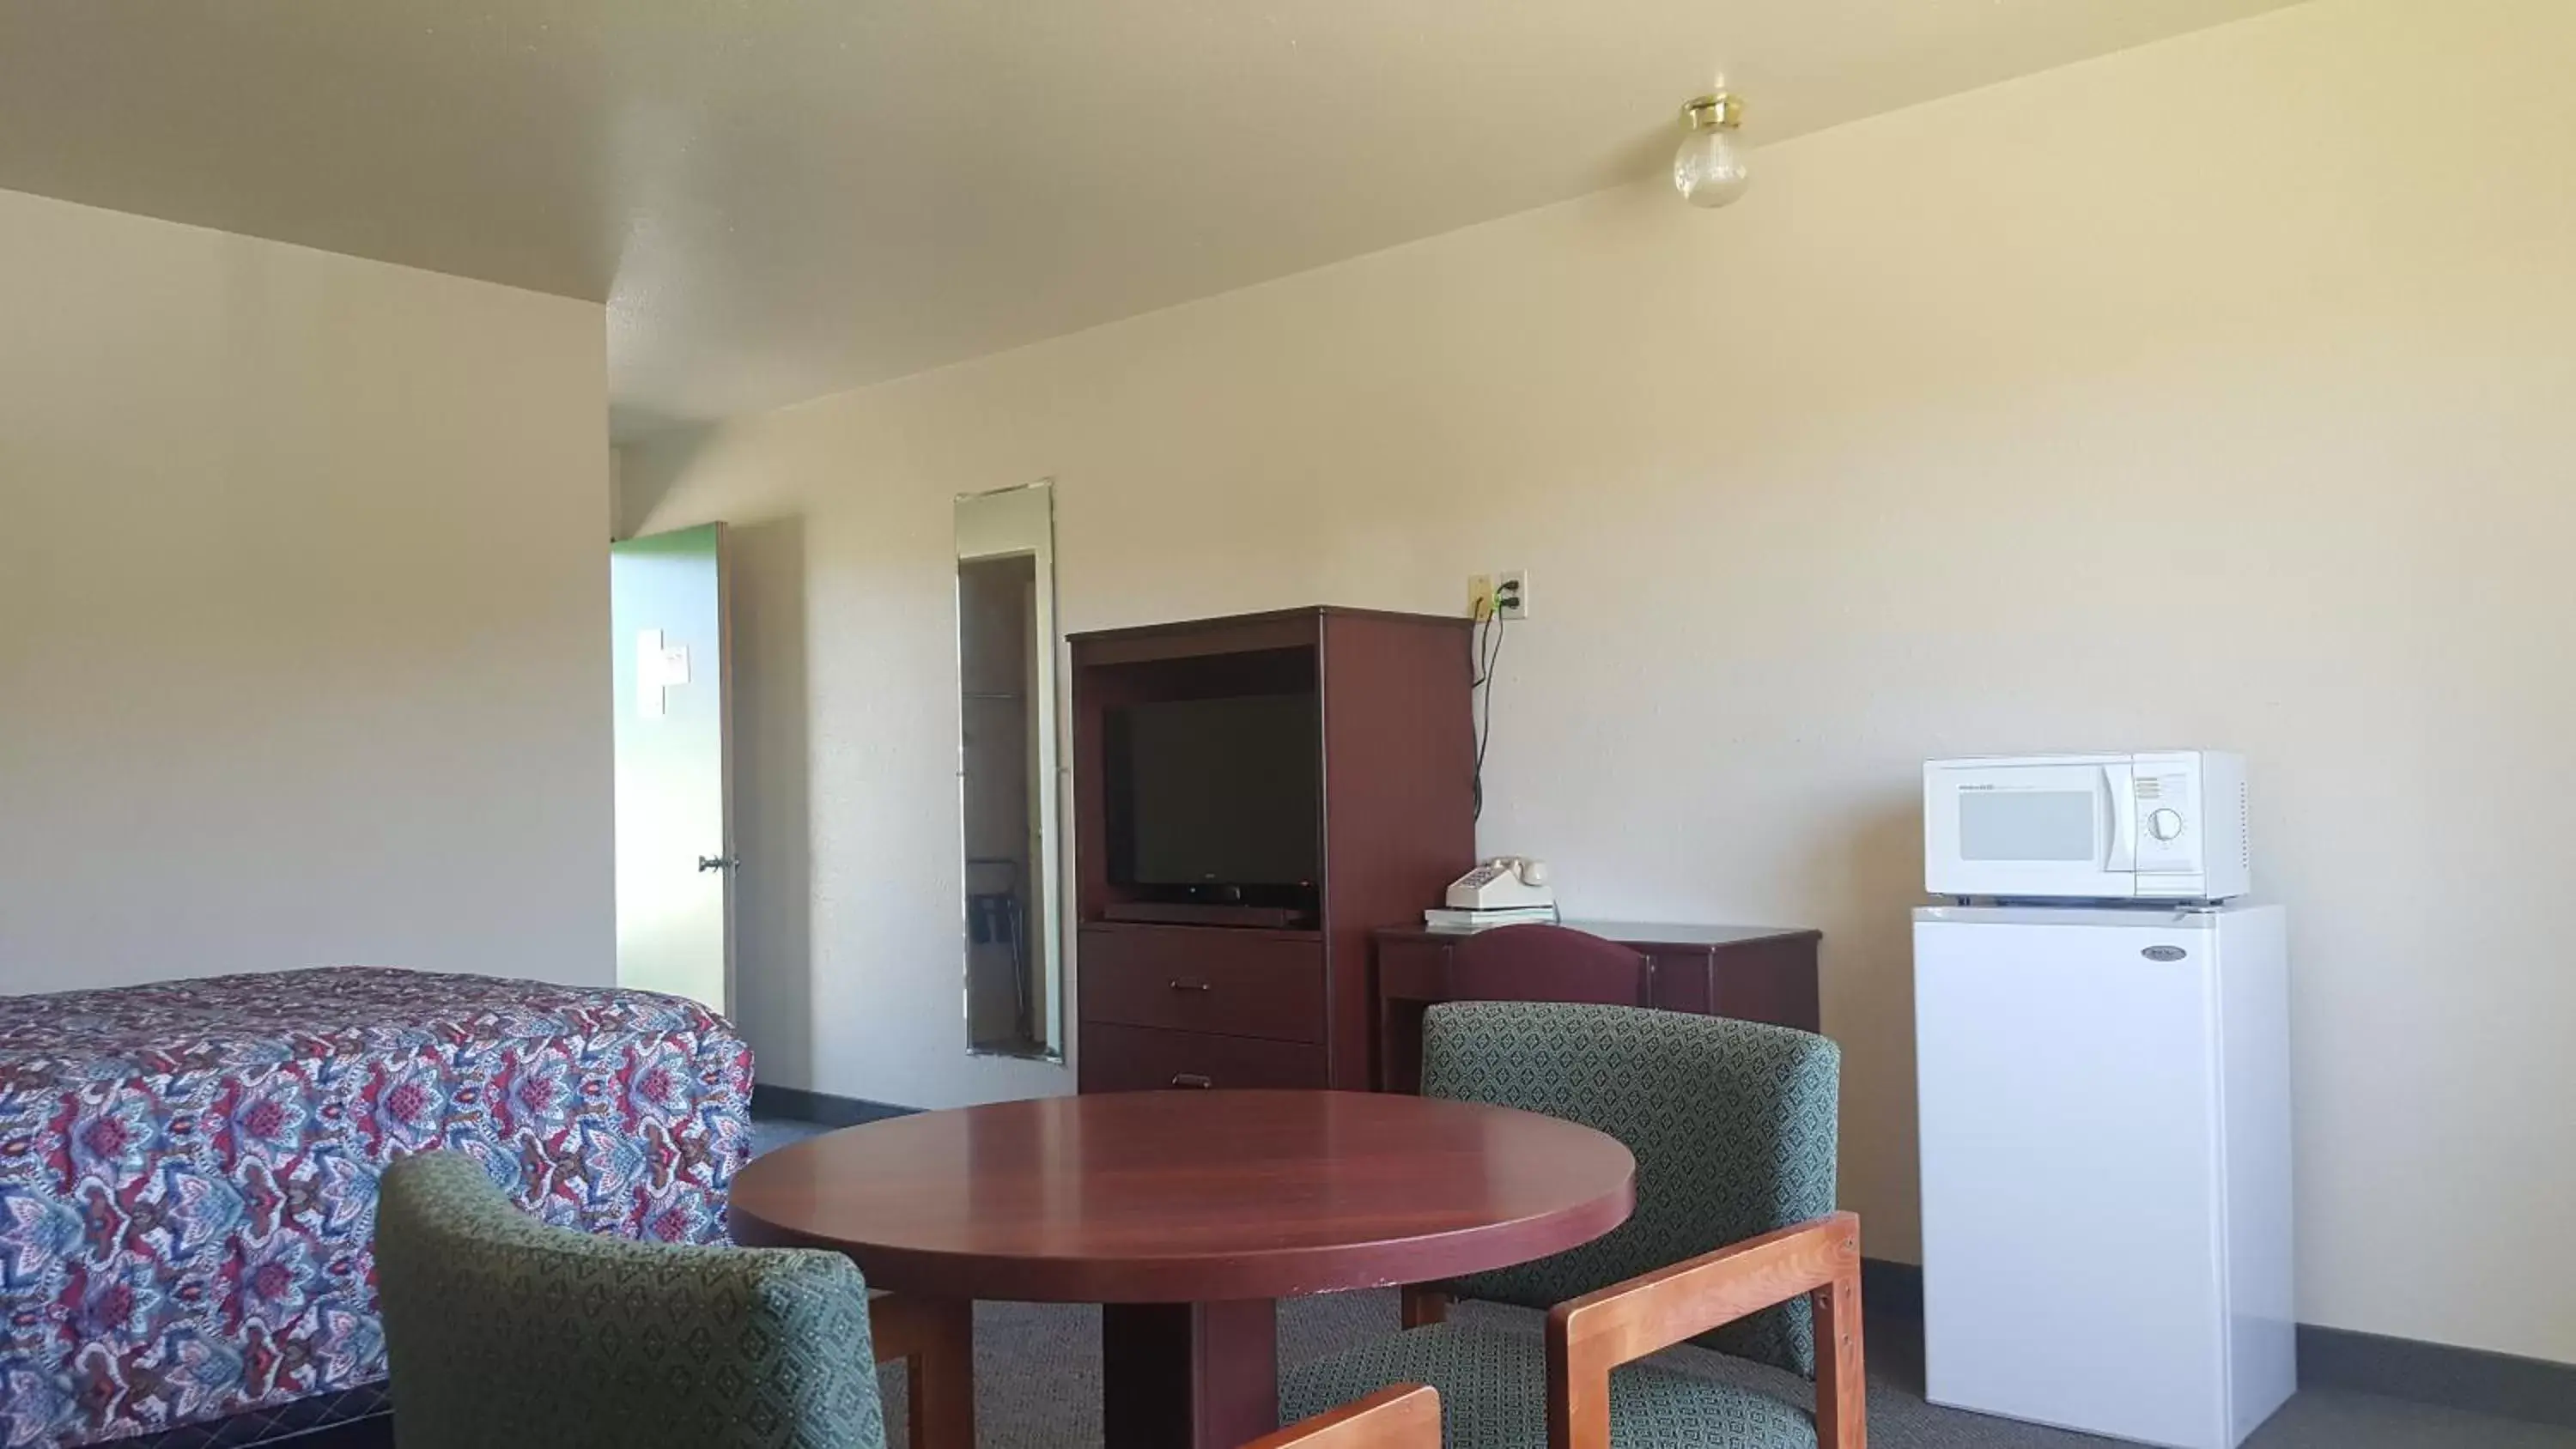 TV and multimedia, Dining Area in Safari Inn Motel